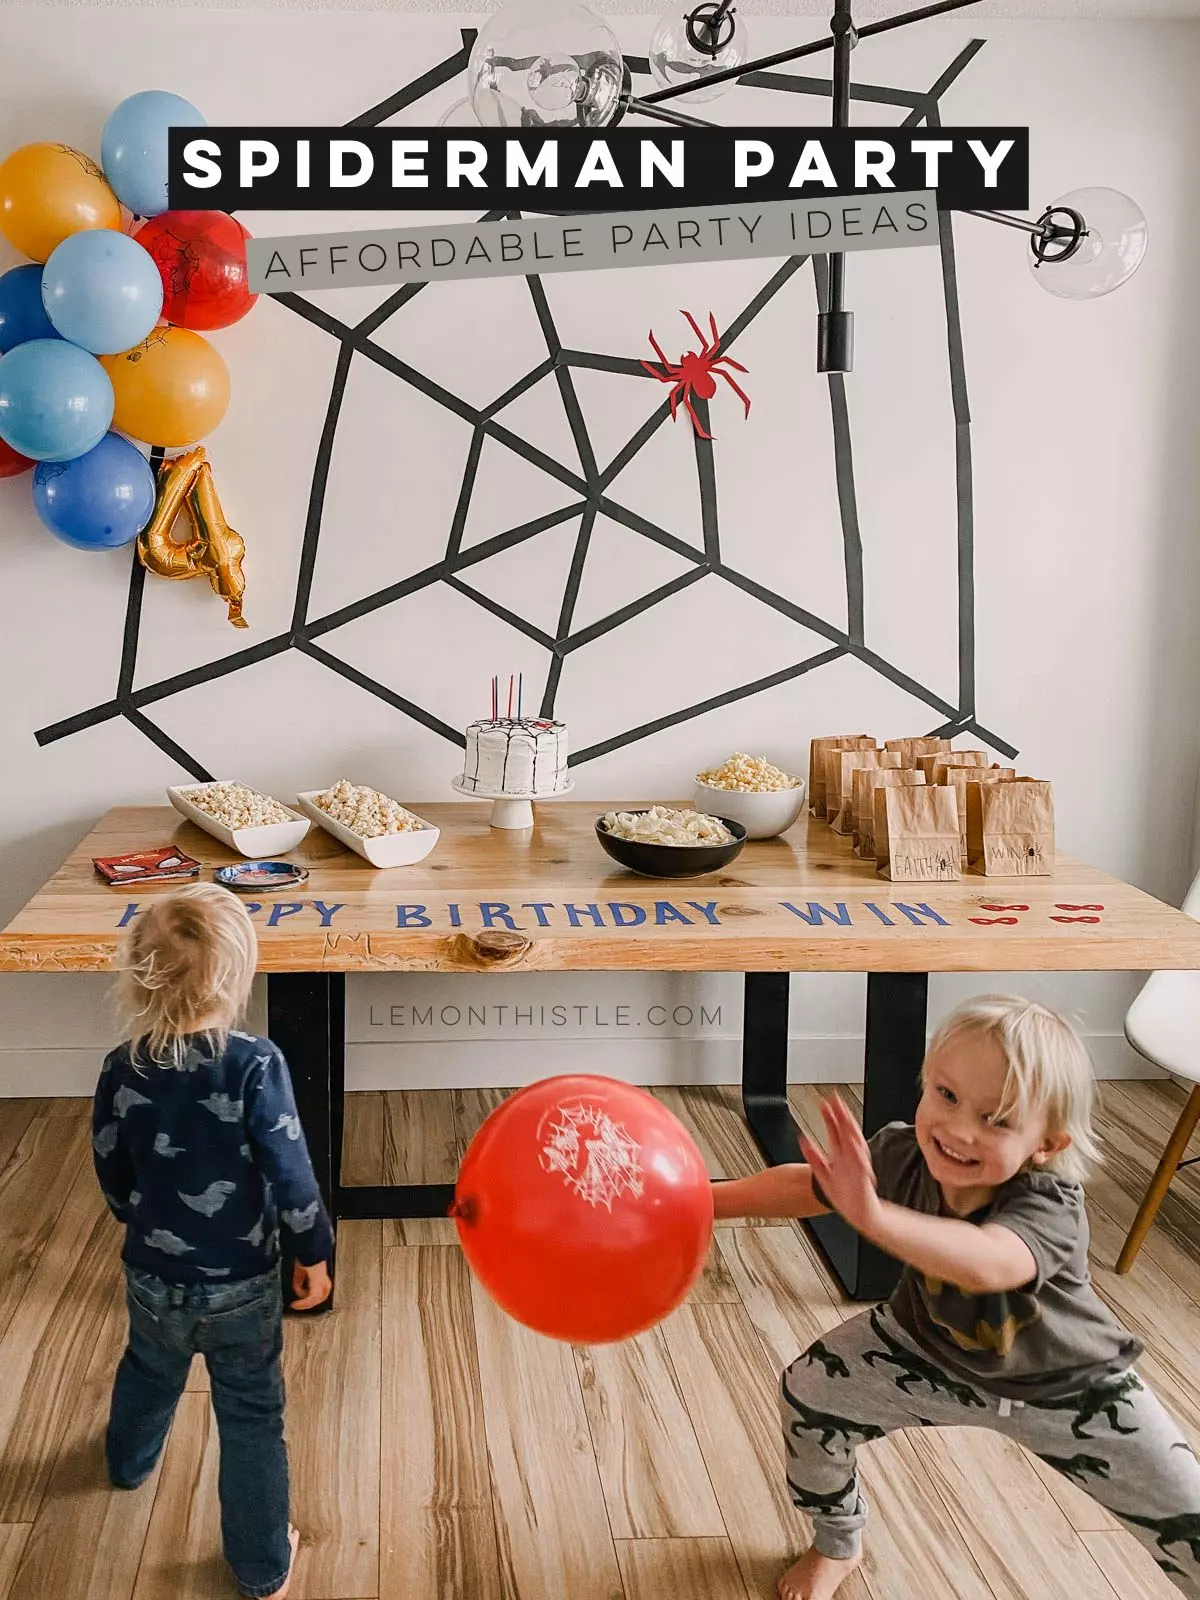 DIY Spiderman birthday party ideas